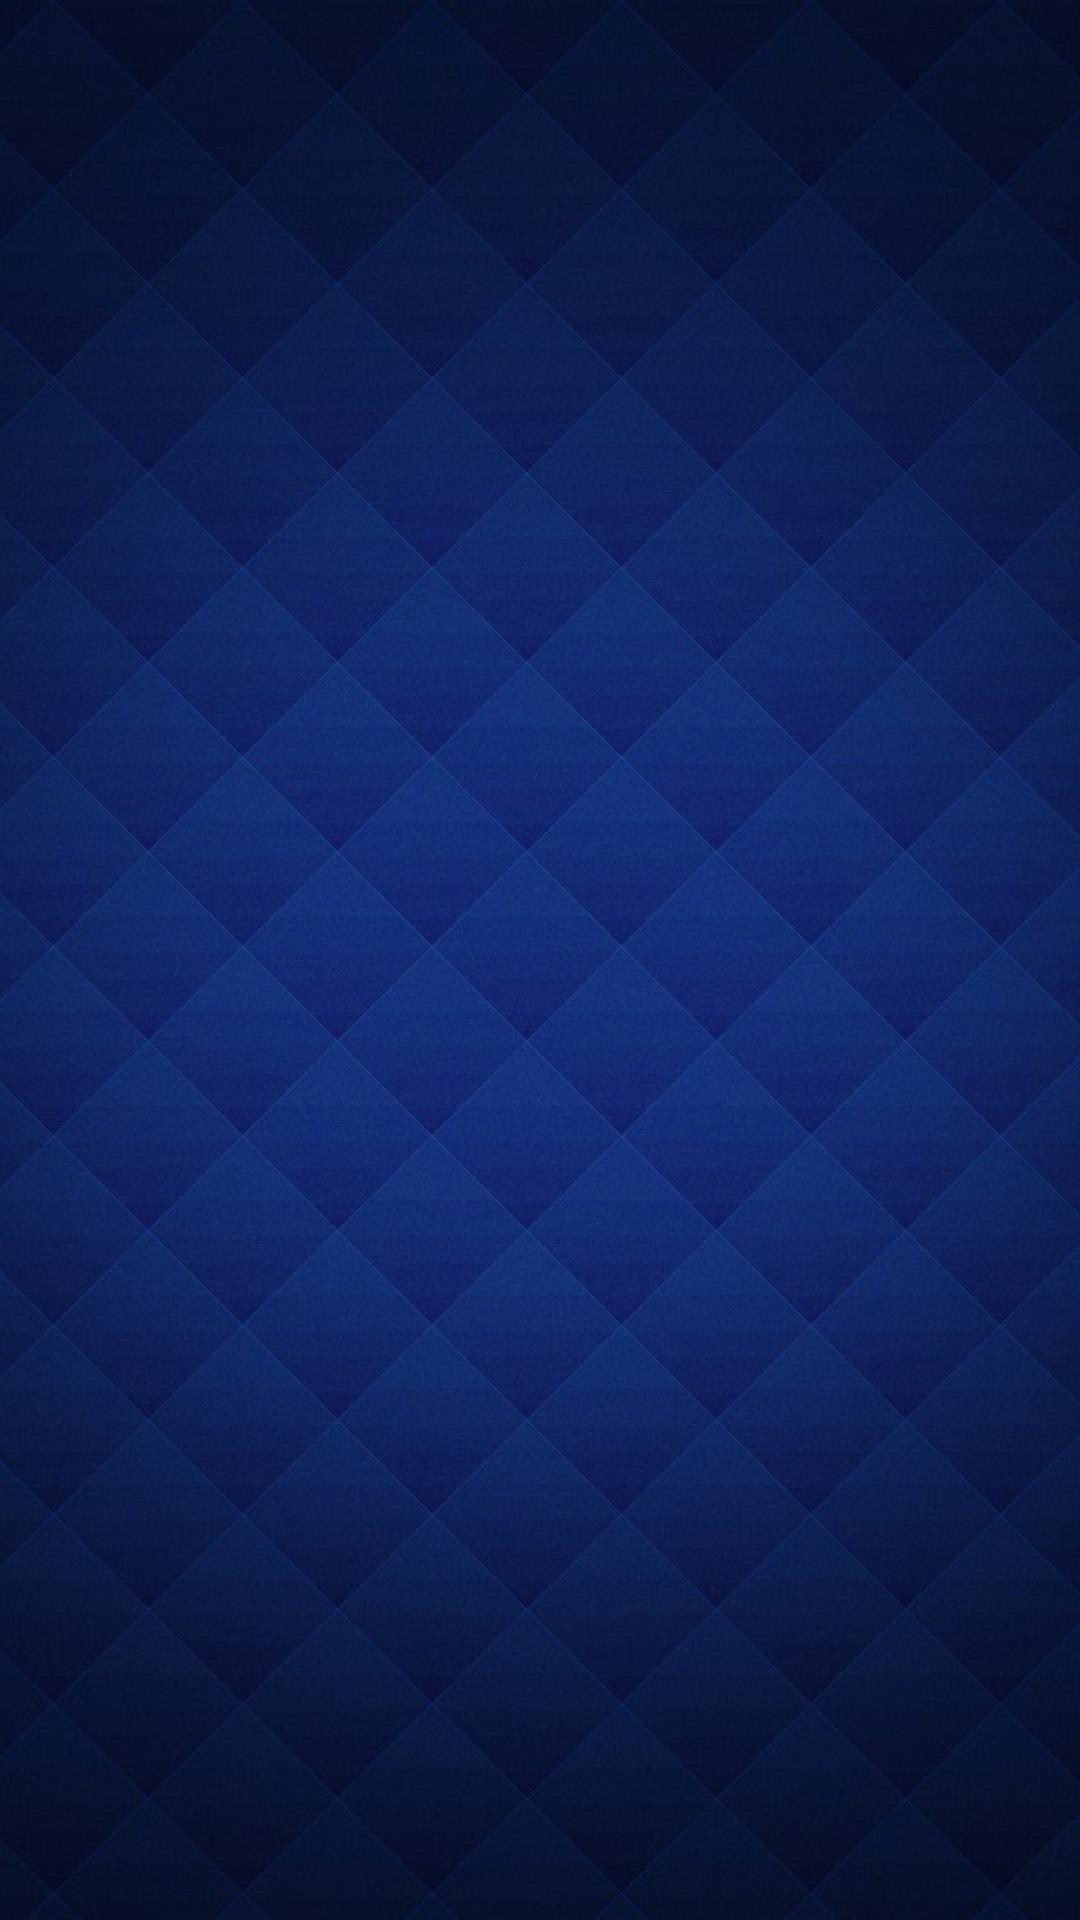 blue iPhone ios 7 wallpaper tumblr for ipad apple logo